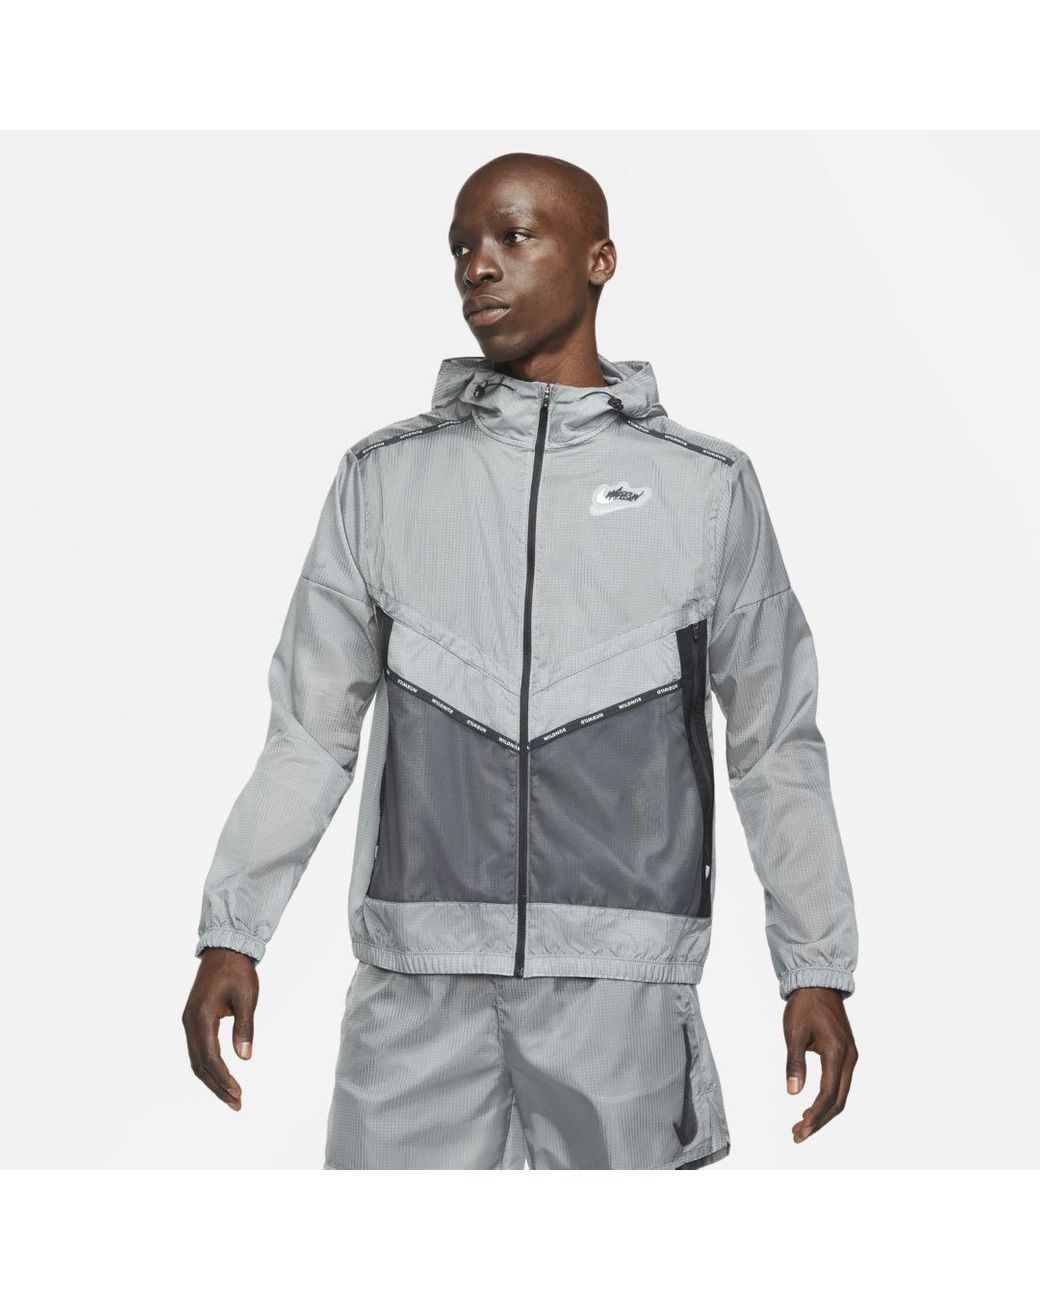 Nike Repel Wild Run Windrunner Graphic Running Jacket in Gray for Men | Lyst